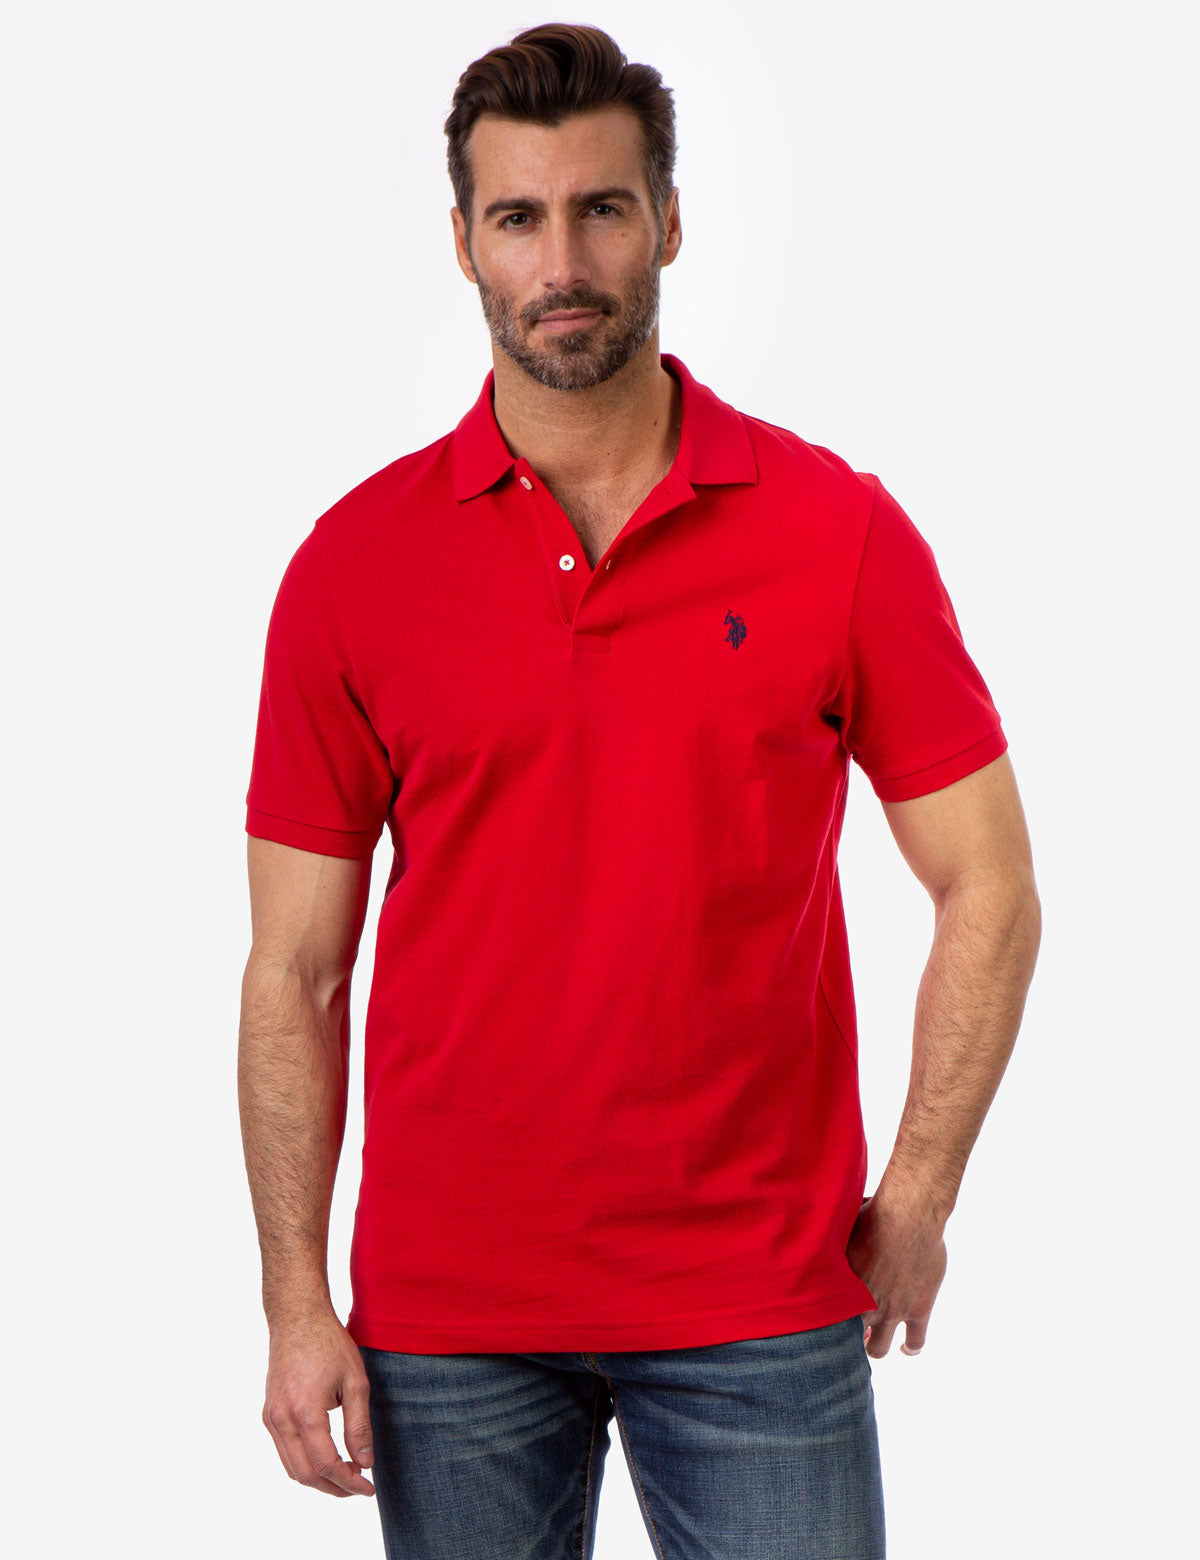 U.S. Polo Assn. Men's Slim Fit Stretch Polo Shirt